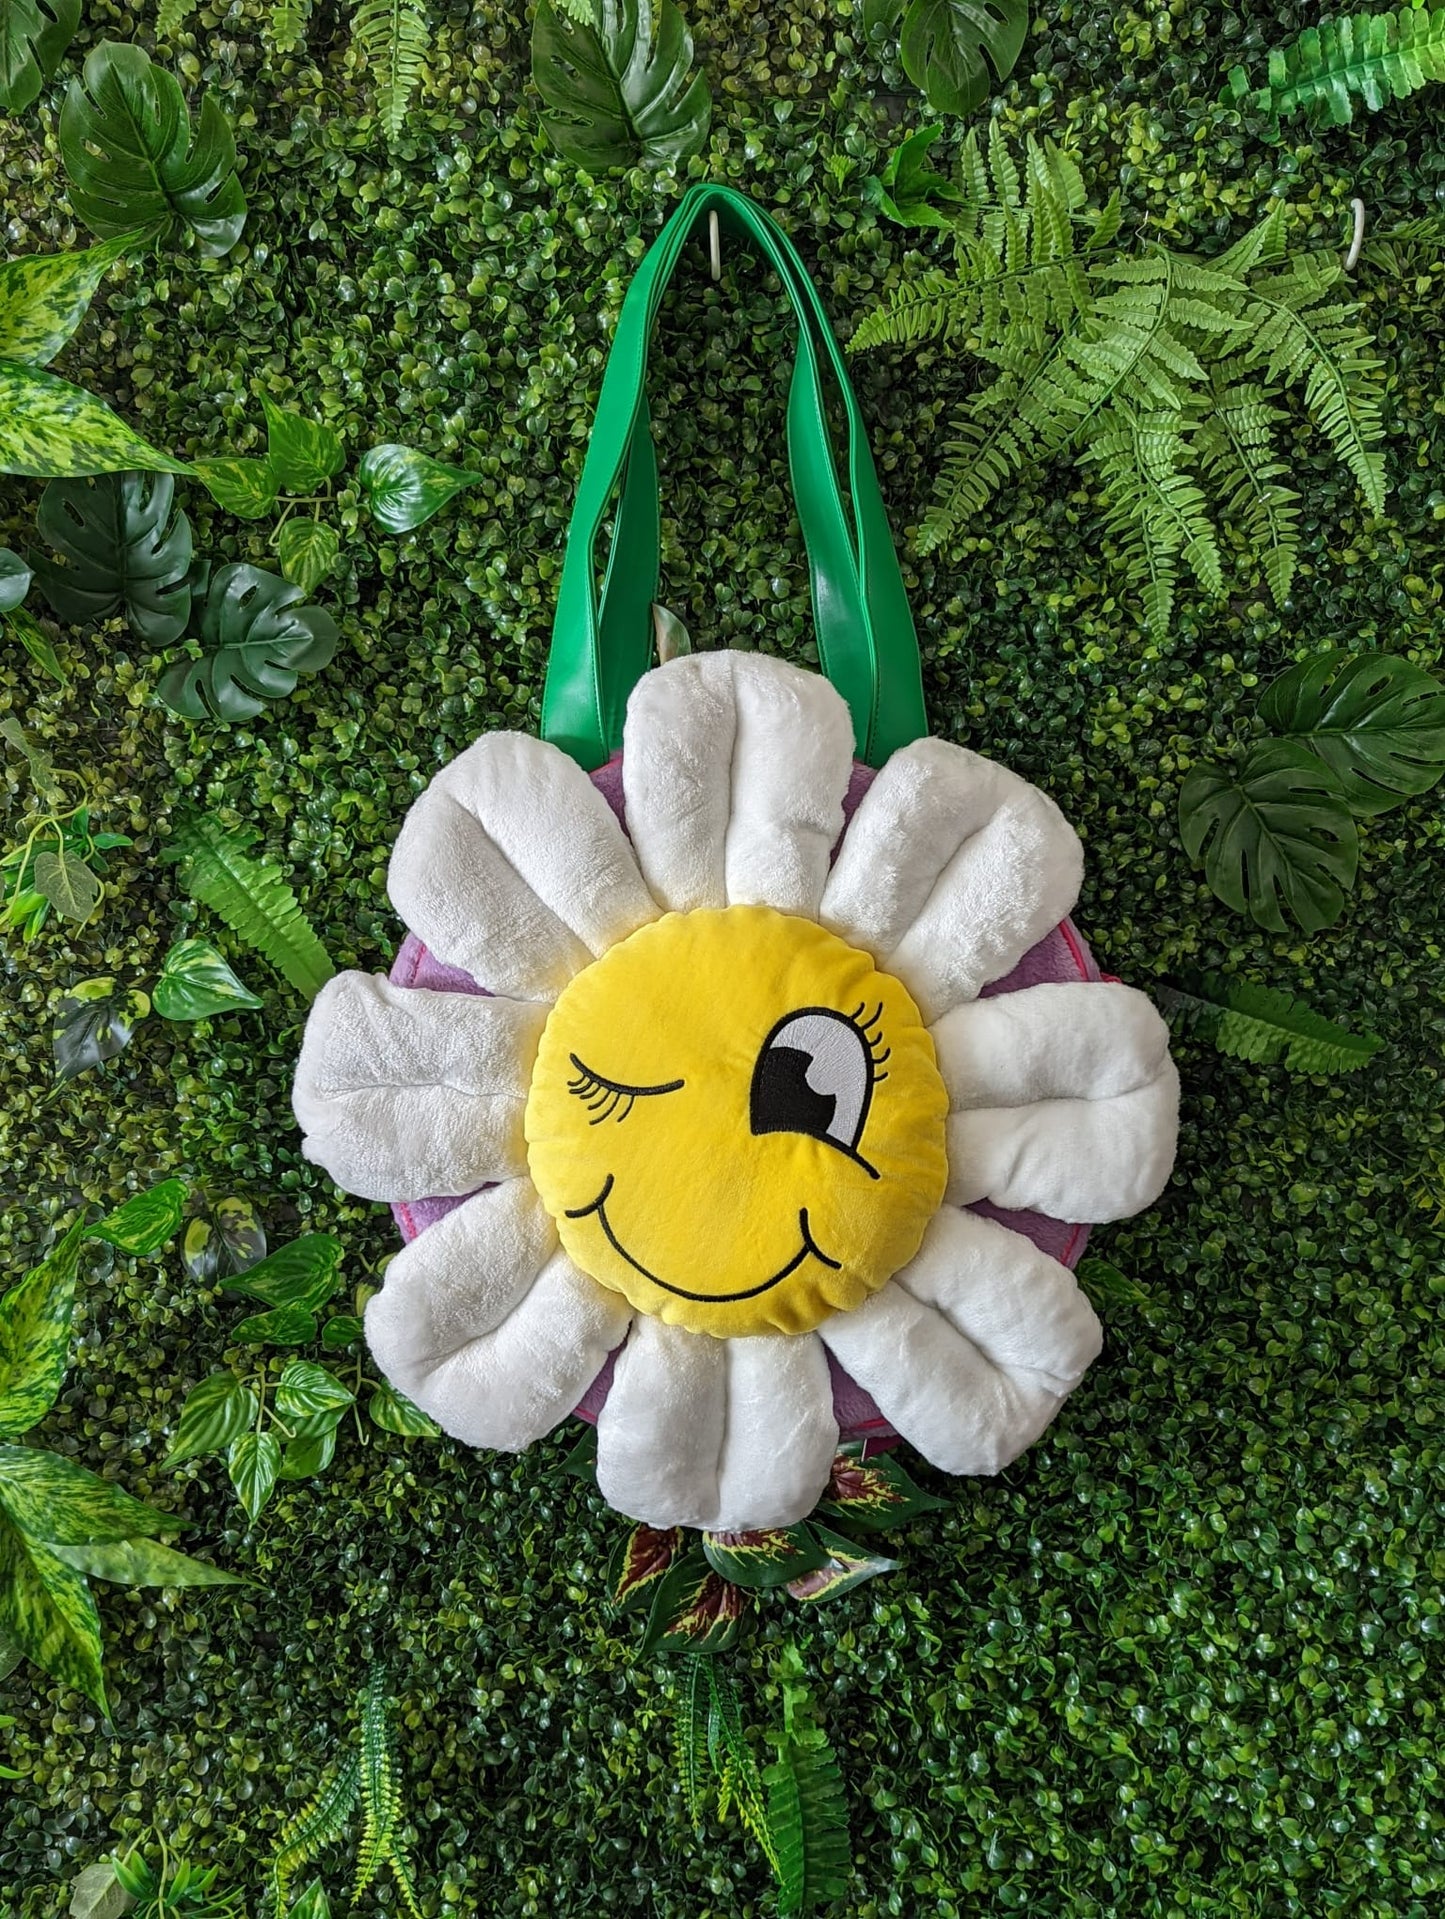 Flower Power Bag - Rockamilly-Bags & Purses-Vintage